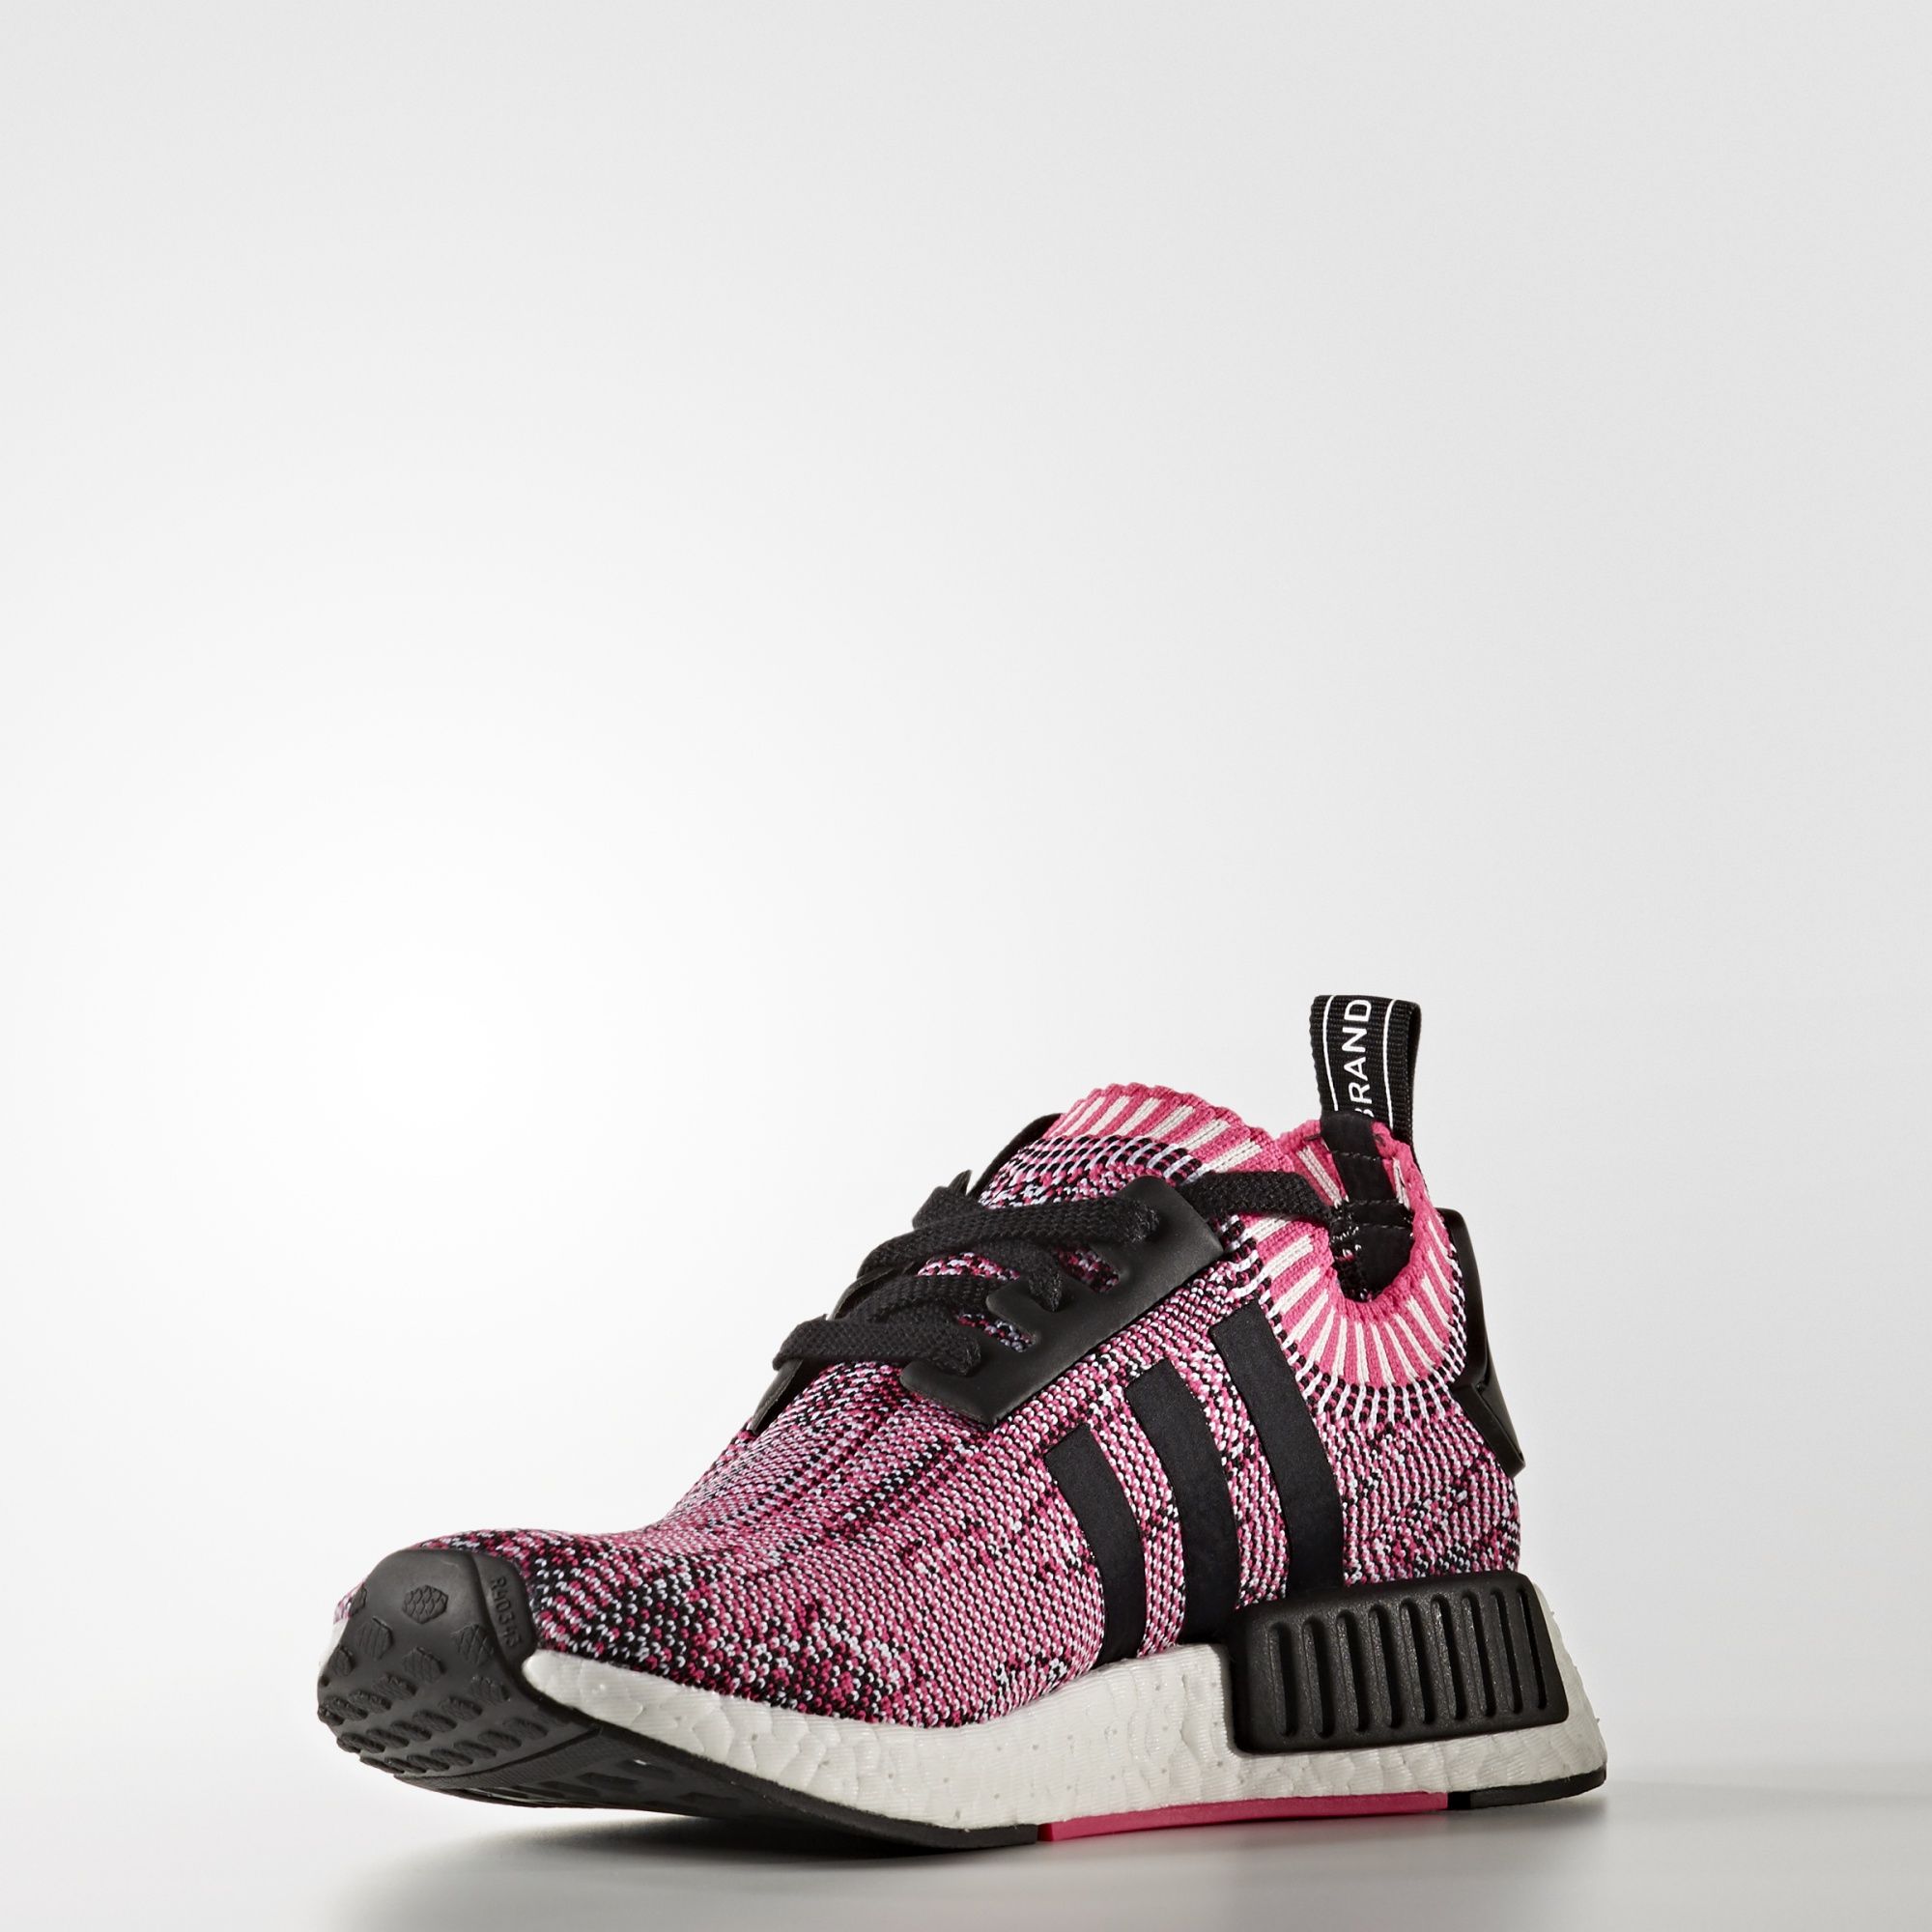 Adidas W NMD_R1
Shock Pink / Core Black